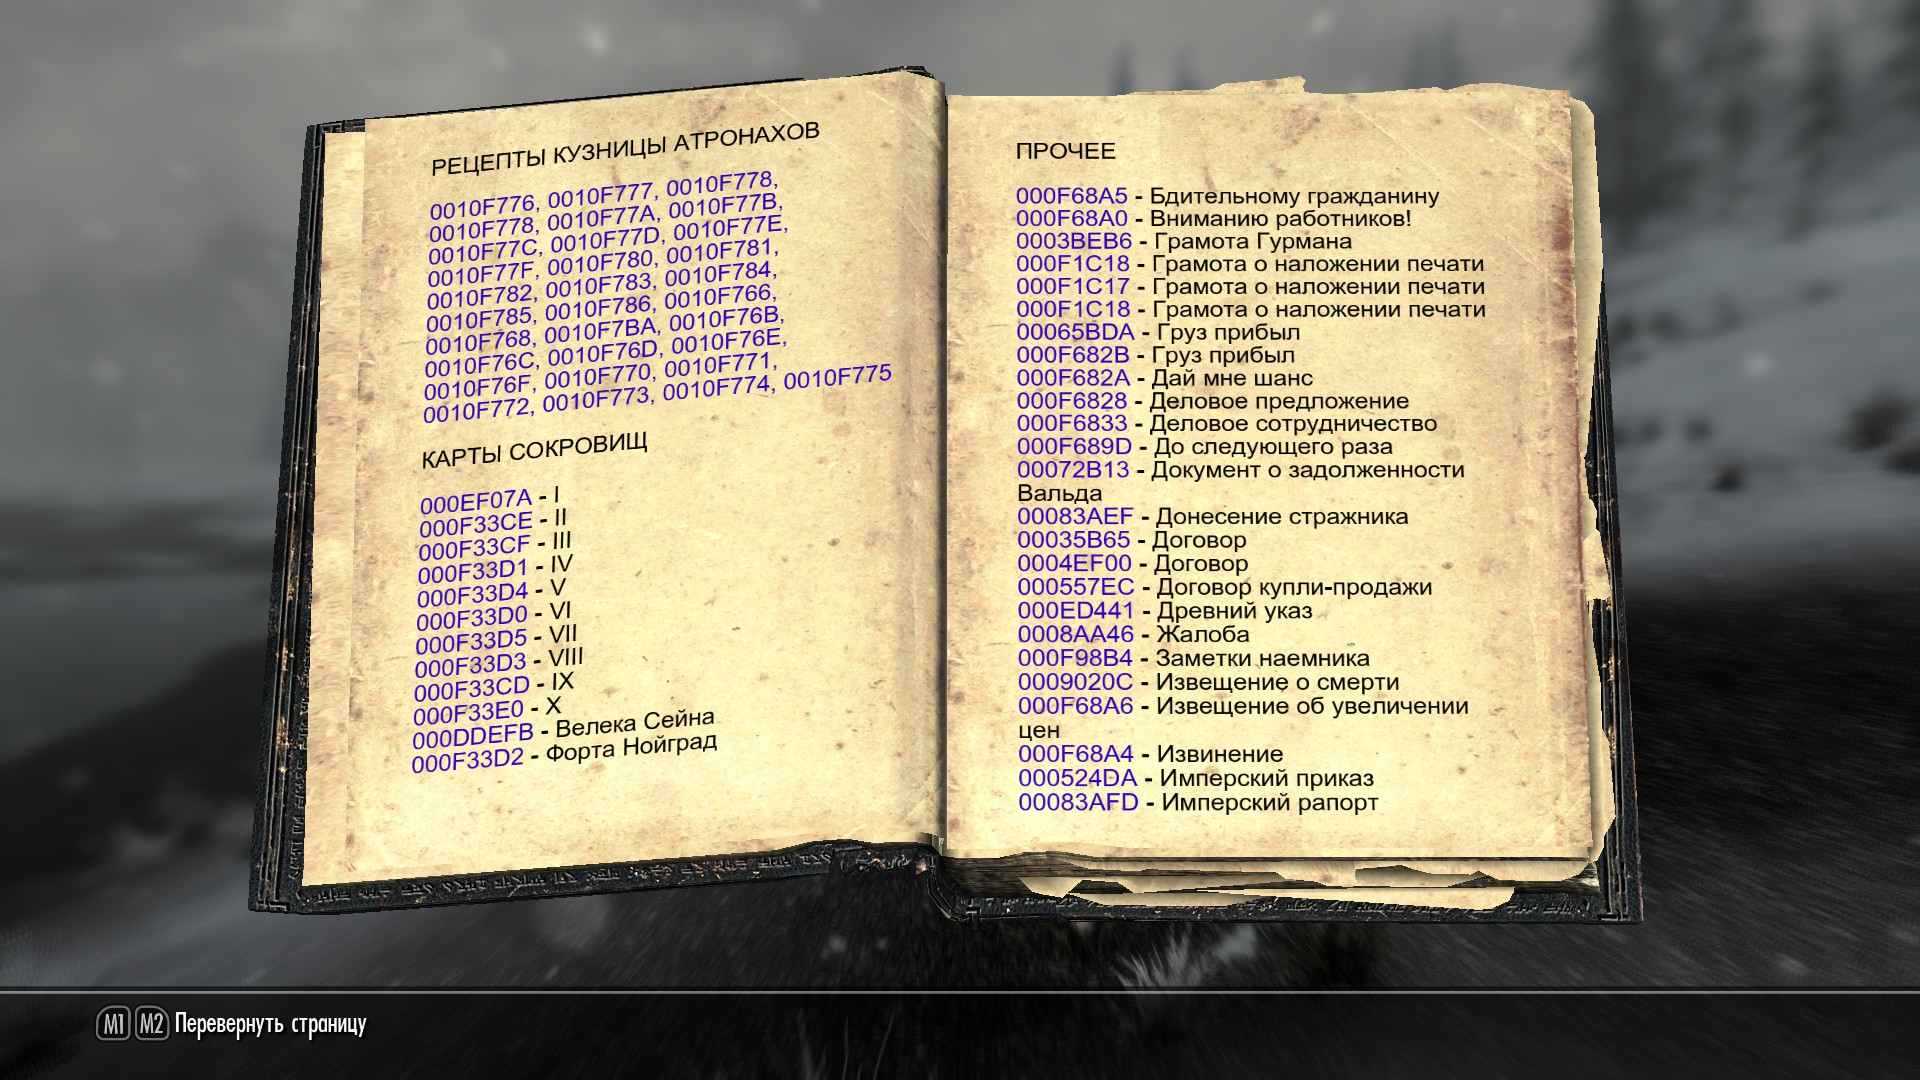 The elder scrolls v skyrim :: интерактивная карта скайрима